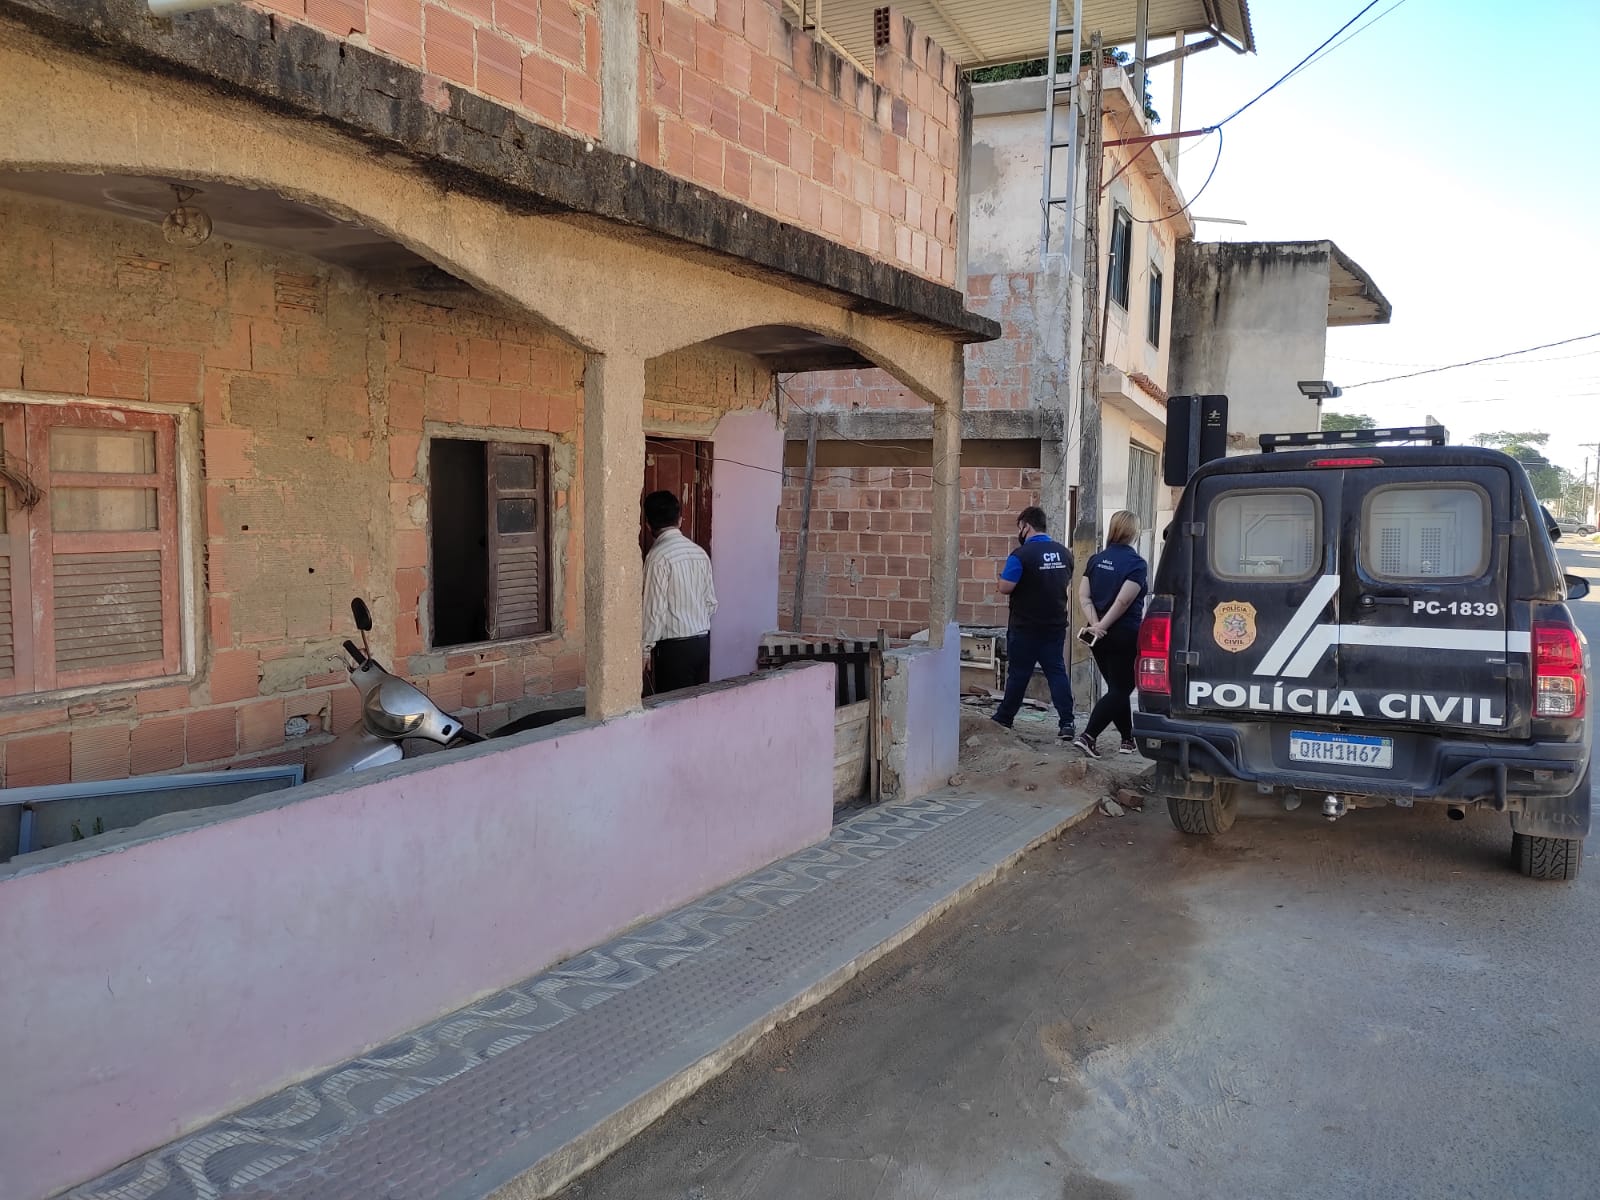 Autônomo de 53 anos foi detido na própria casa, no bairro Vila de Itapemirim, que fica na Zona Rural de Itapemirim